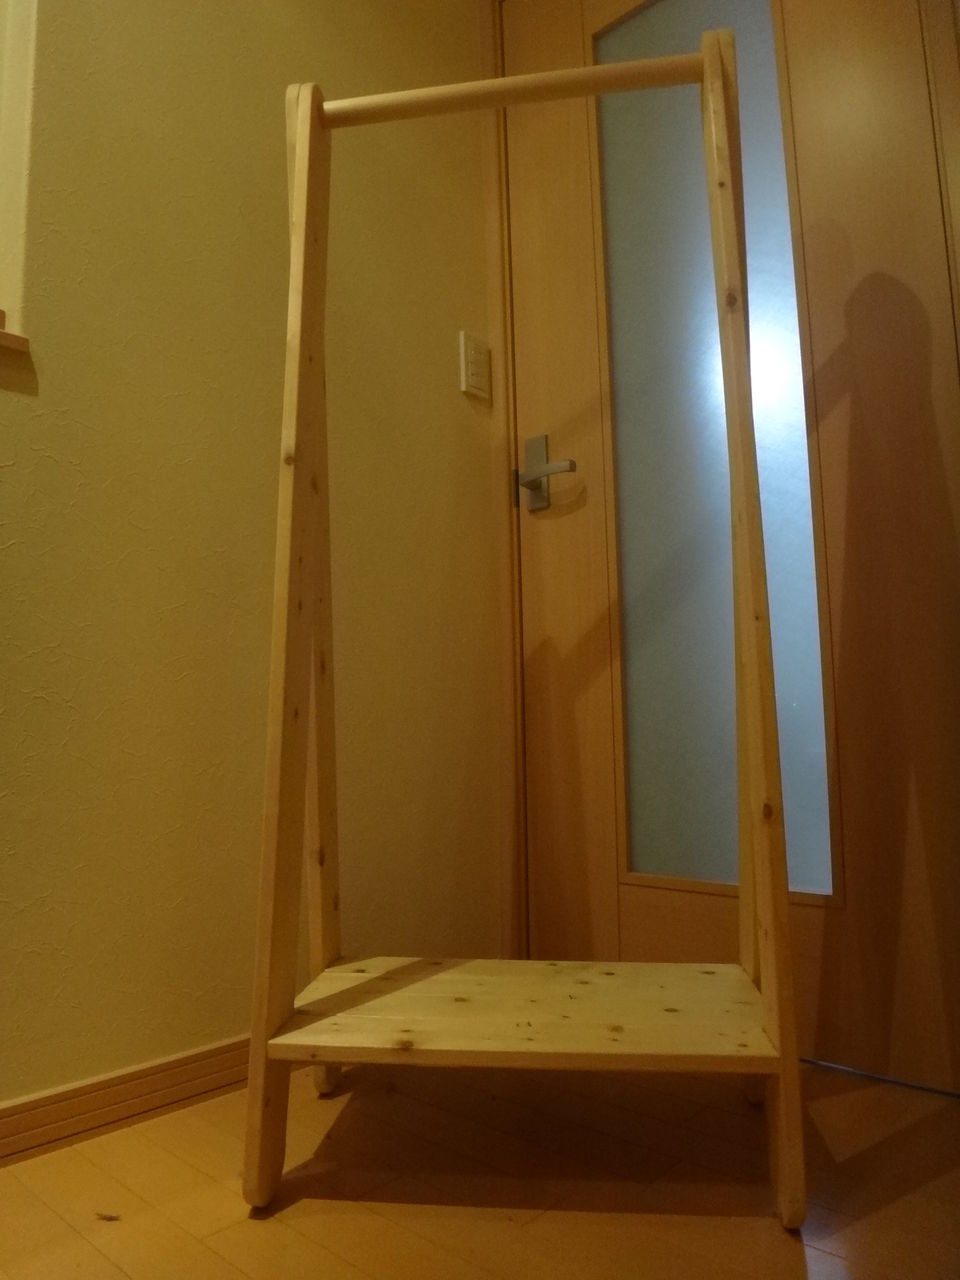 ｄｉｙ ｓｐｆ１ ４材で作る 玄関用木製ハンガーラック 作り方詳細編 道産子サラリーマンの北海道生活を楽しむ方法